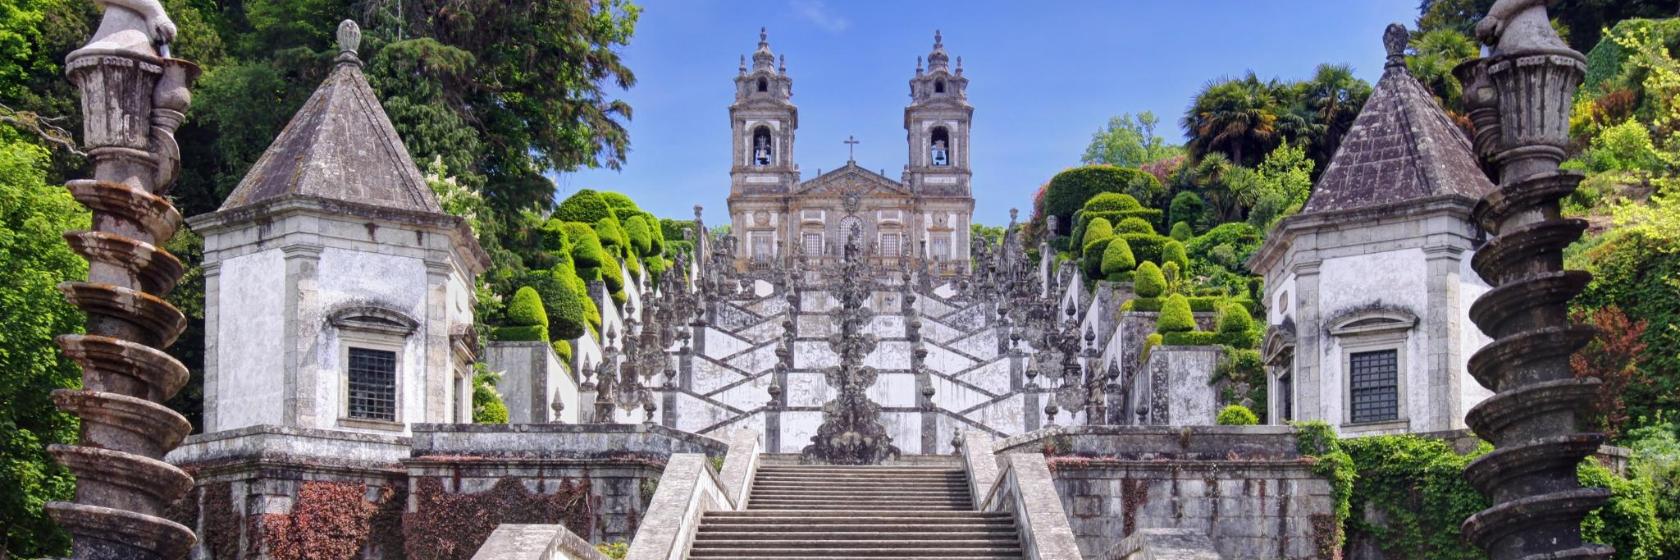 The 10 best hotels near Bom Jesus do Monte Sanctuary in Braga, Portugal